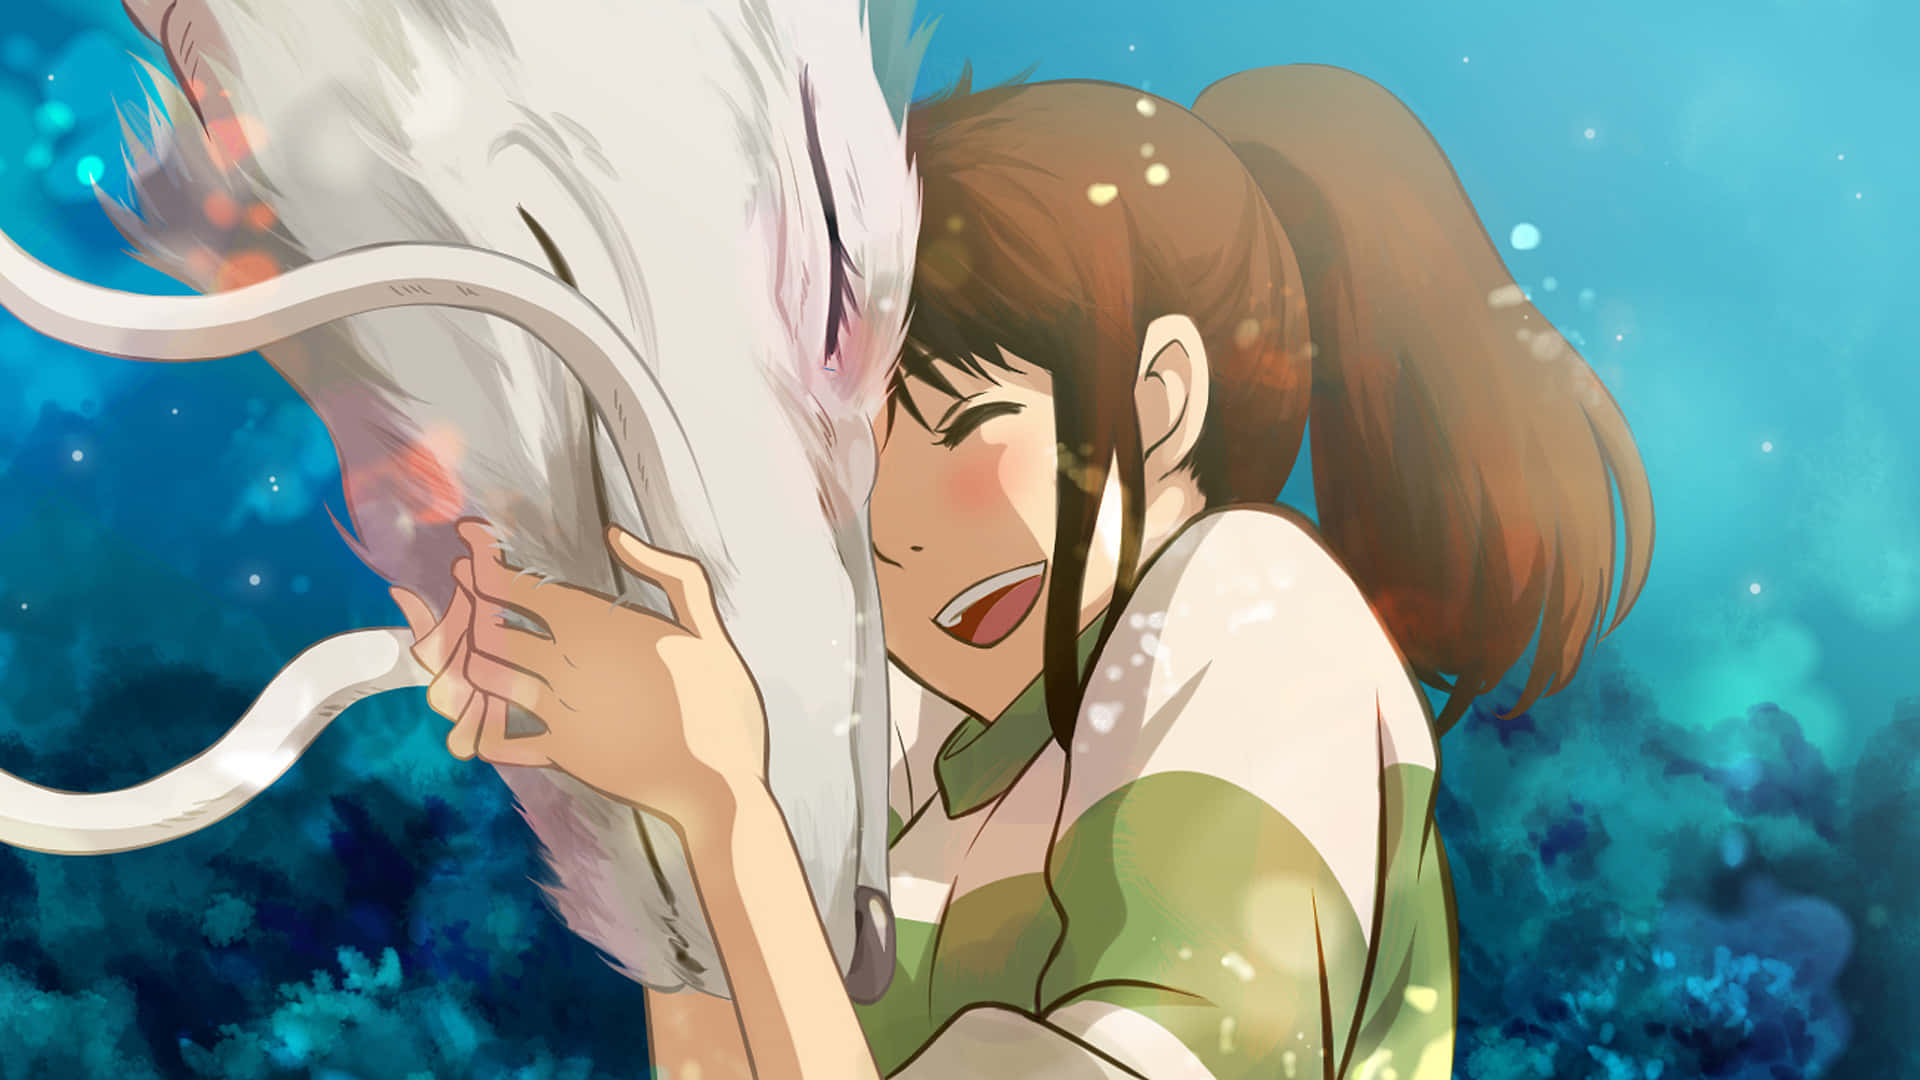 Hayao Miyazaki's Spirited Away transports us to a nostalgic and wonder-filled world of Japanese folktales.